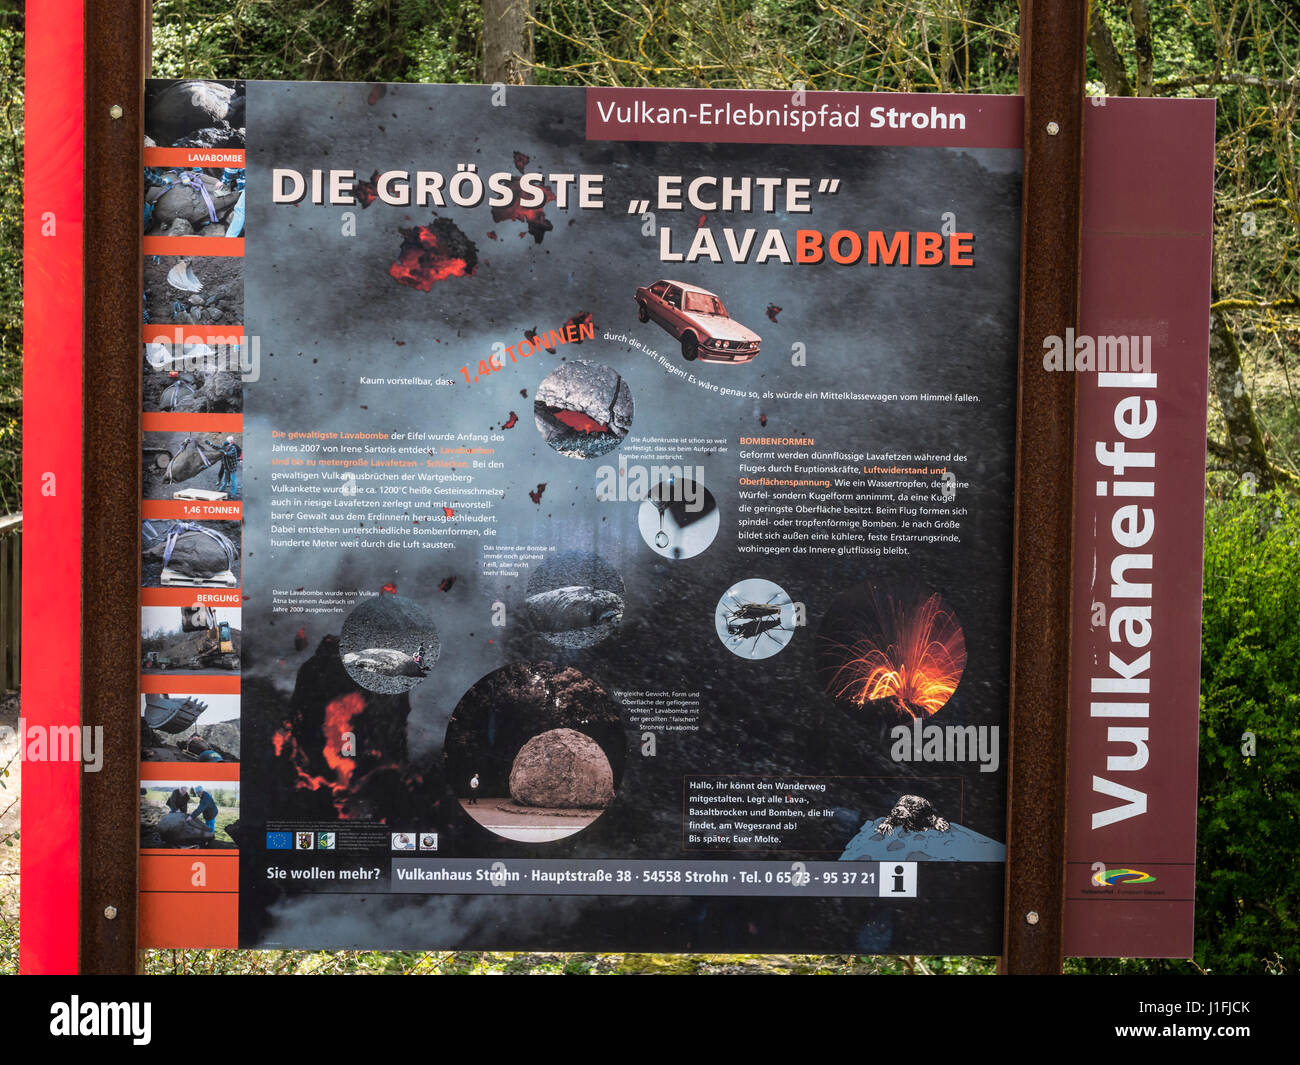 Poster describing volcanic phenomens, largest lava bomb exhibited in village Strohn, near Daun, volcanic region, Eifel, Germany Stock Photo